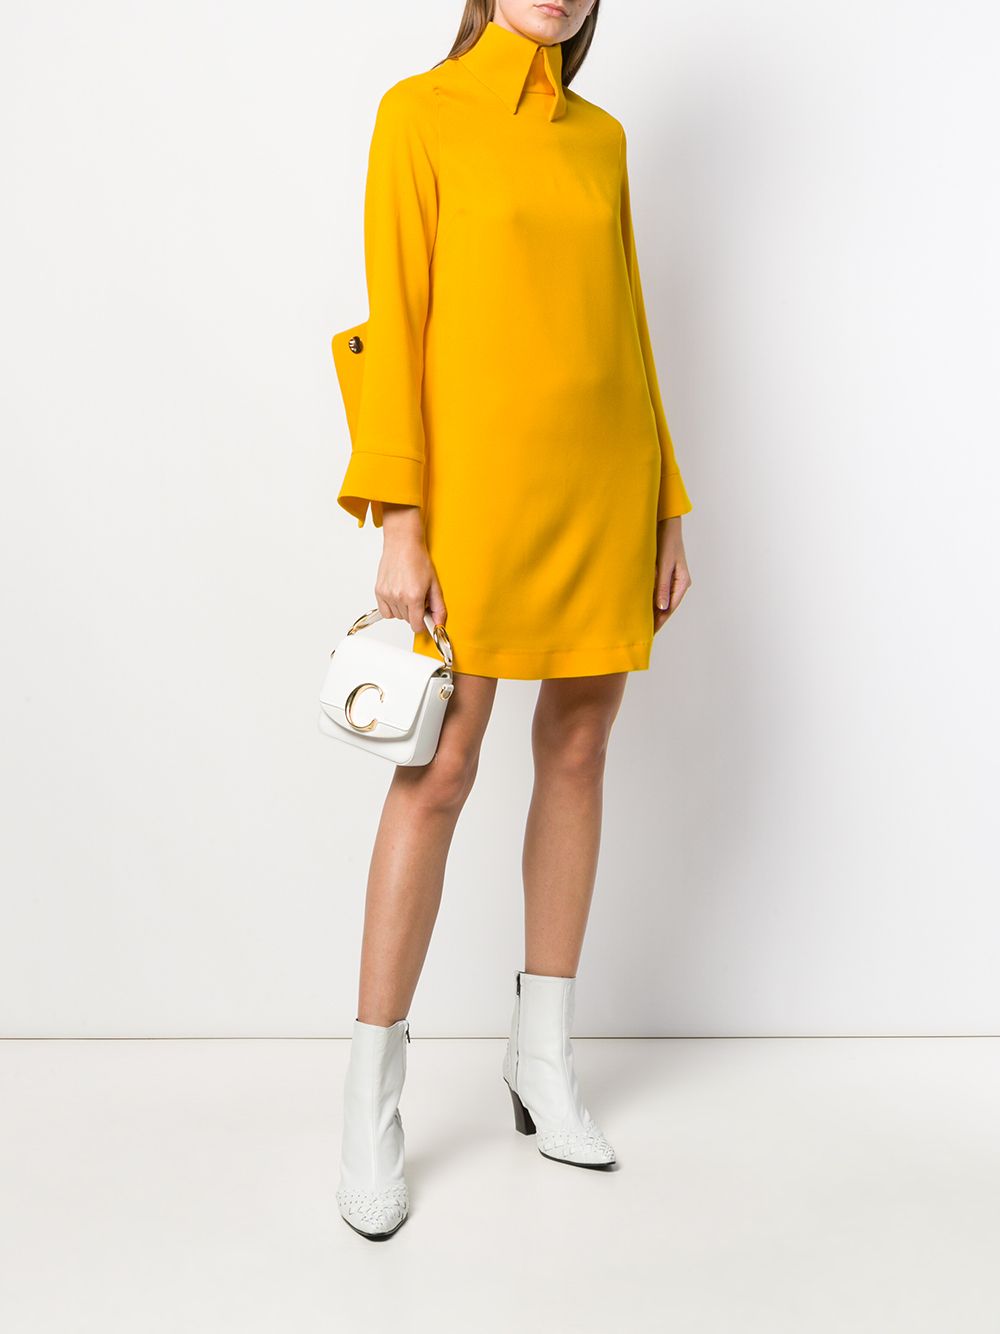 Erika Cavallini Yellow Collared Dress Veronique Luxury Collections